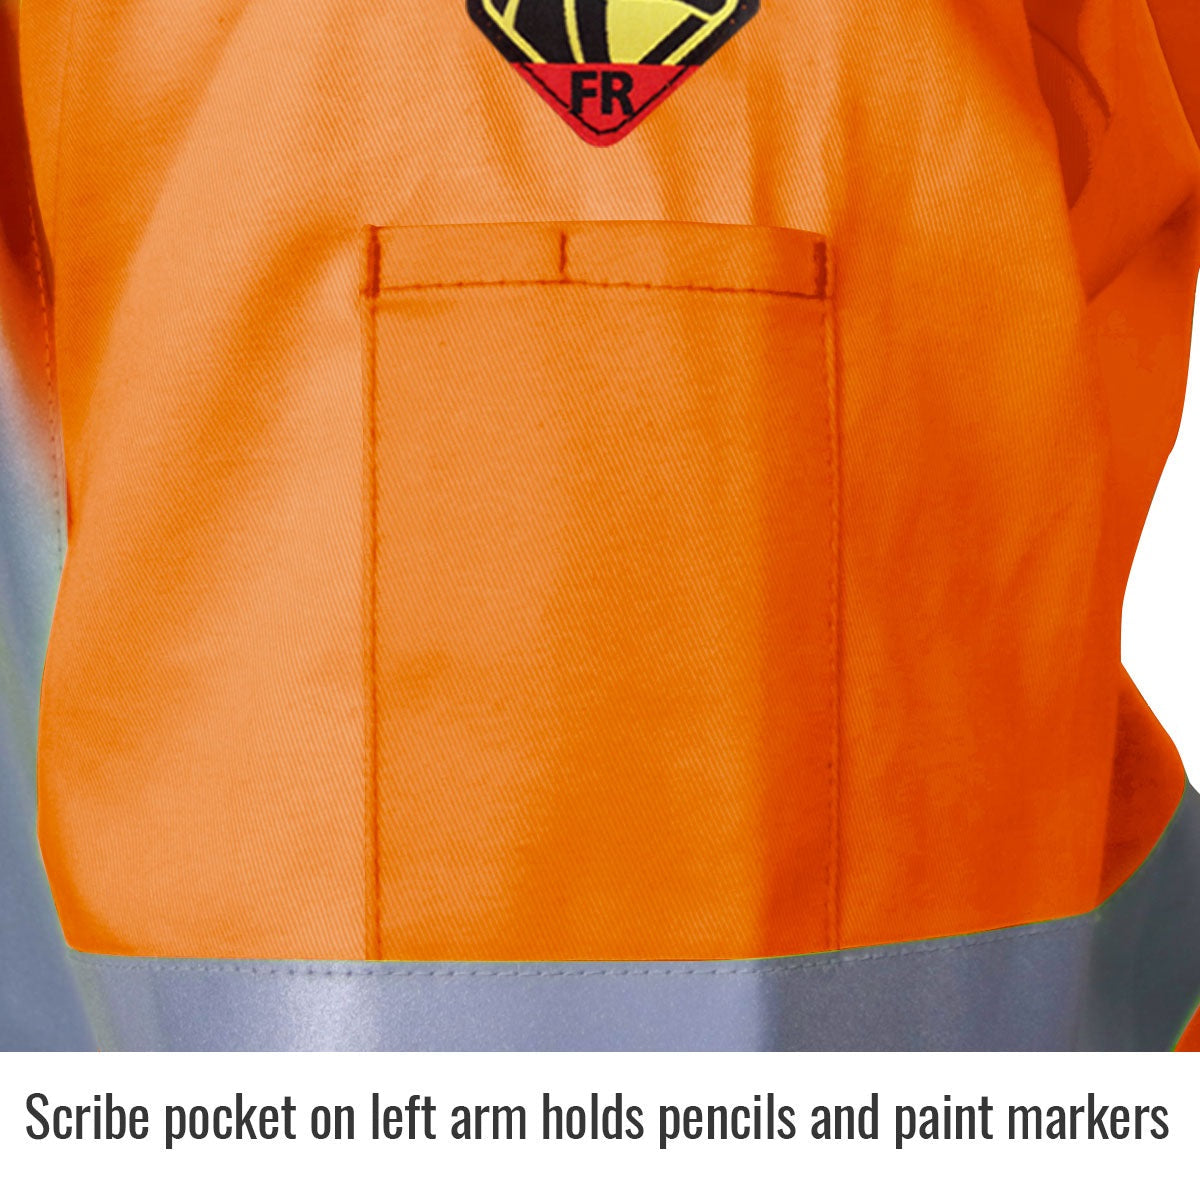 Revco Black Stallion 9oz Orange Safety Welding Jacket w/FR Reflective Tape (JF1012-OR)